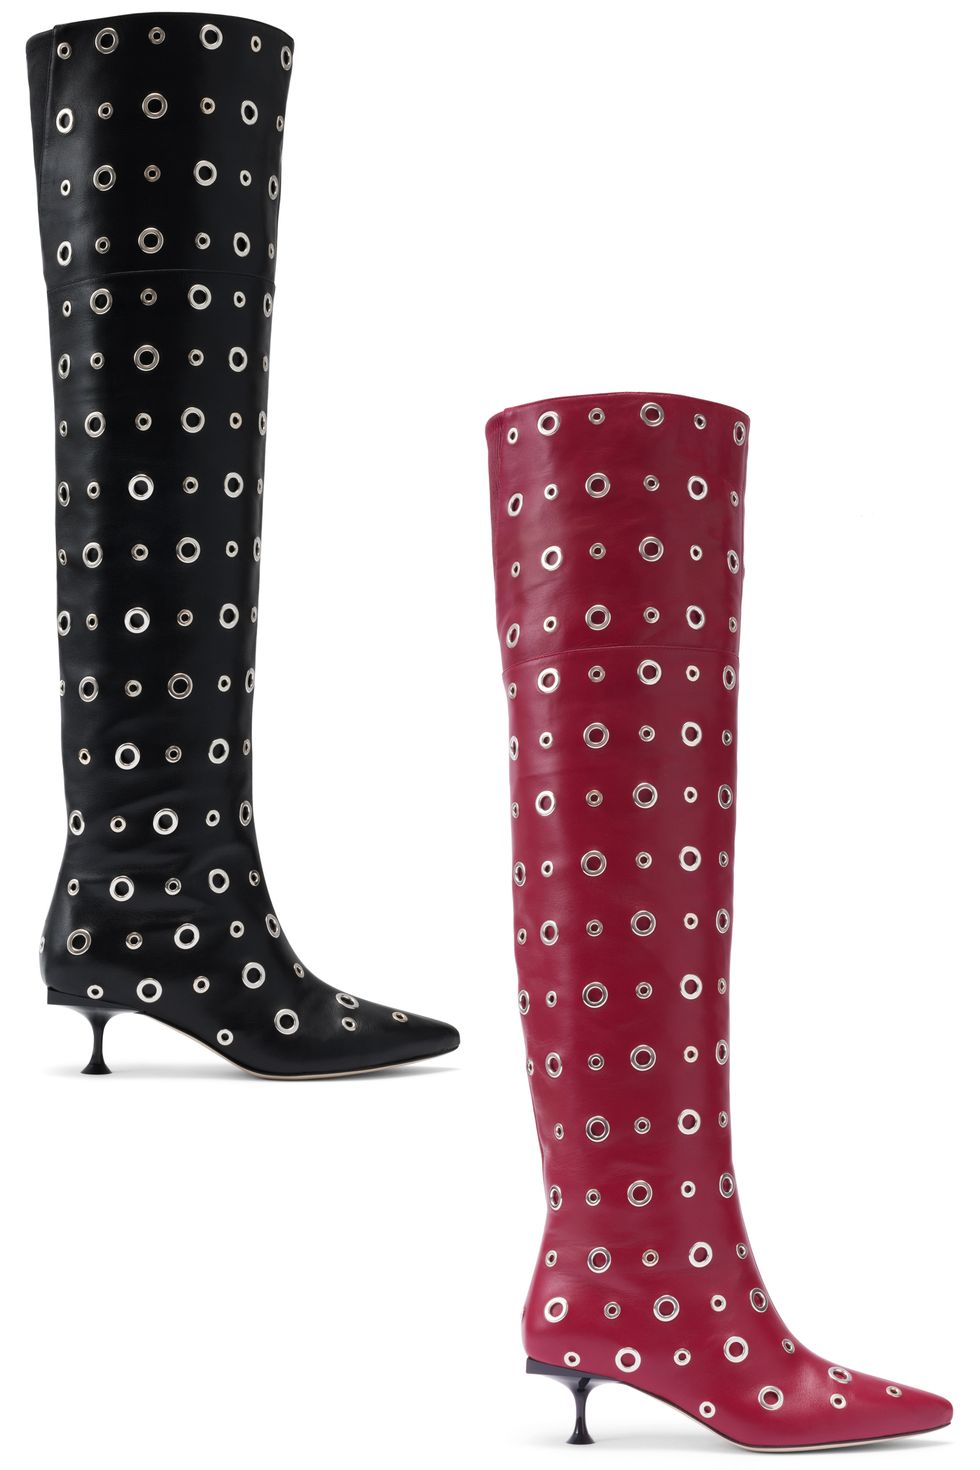 Footwear, Boot, Knee-high boot, Shoe, Pattern, Polka dot, Rain boot, Design, High heels, Leg, 